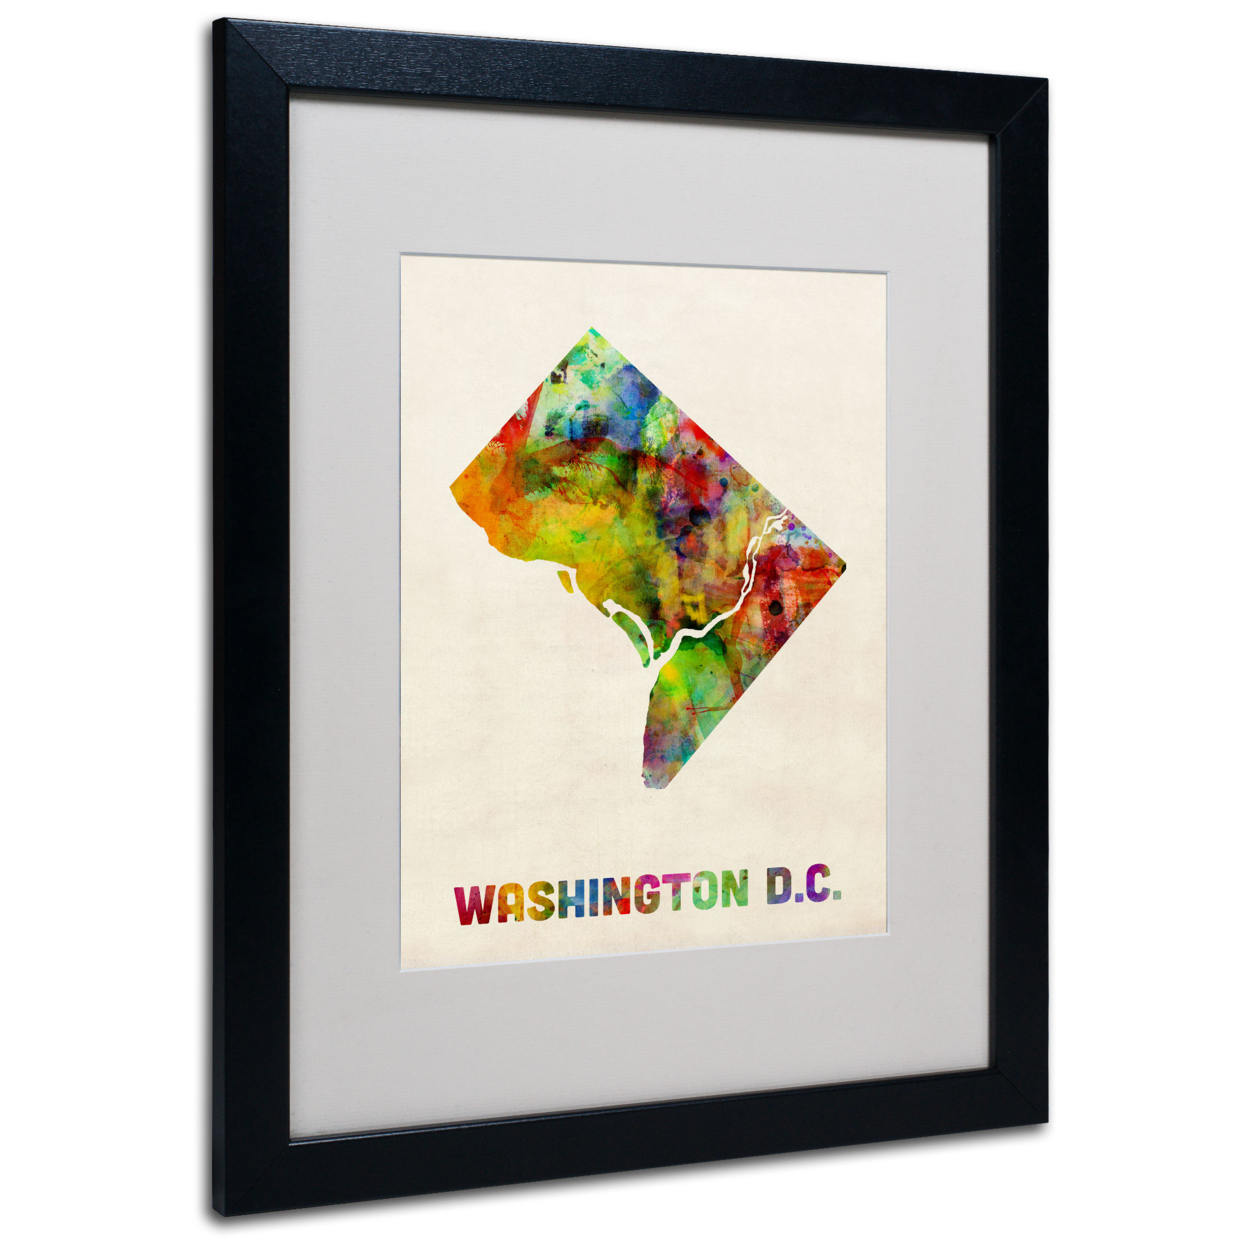 Michael Tompsett 'Washington D.C. Map' Black Wooden Framed Art 18 X 22 Inches